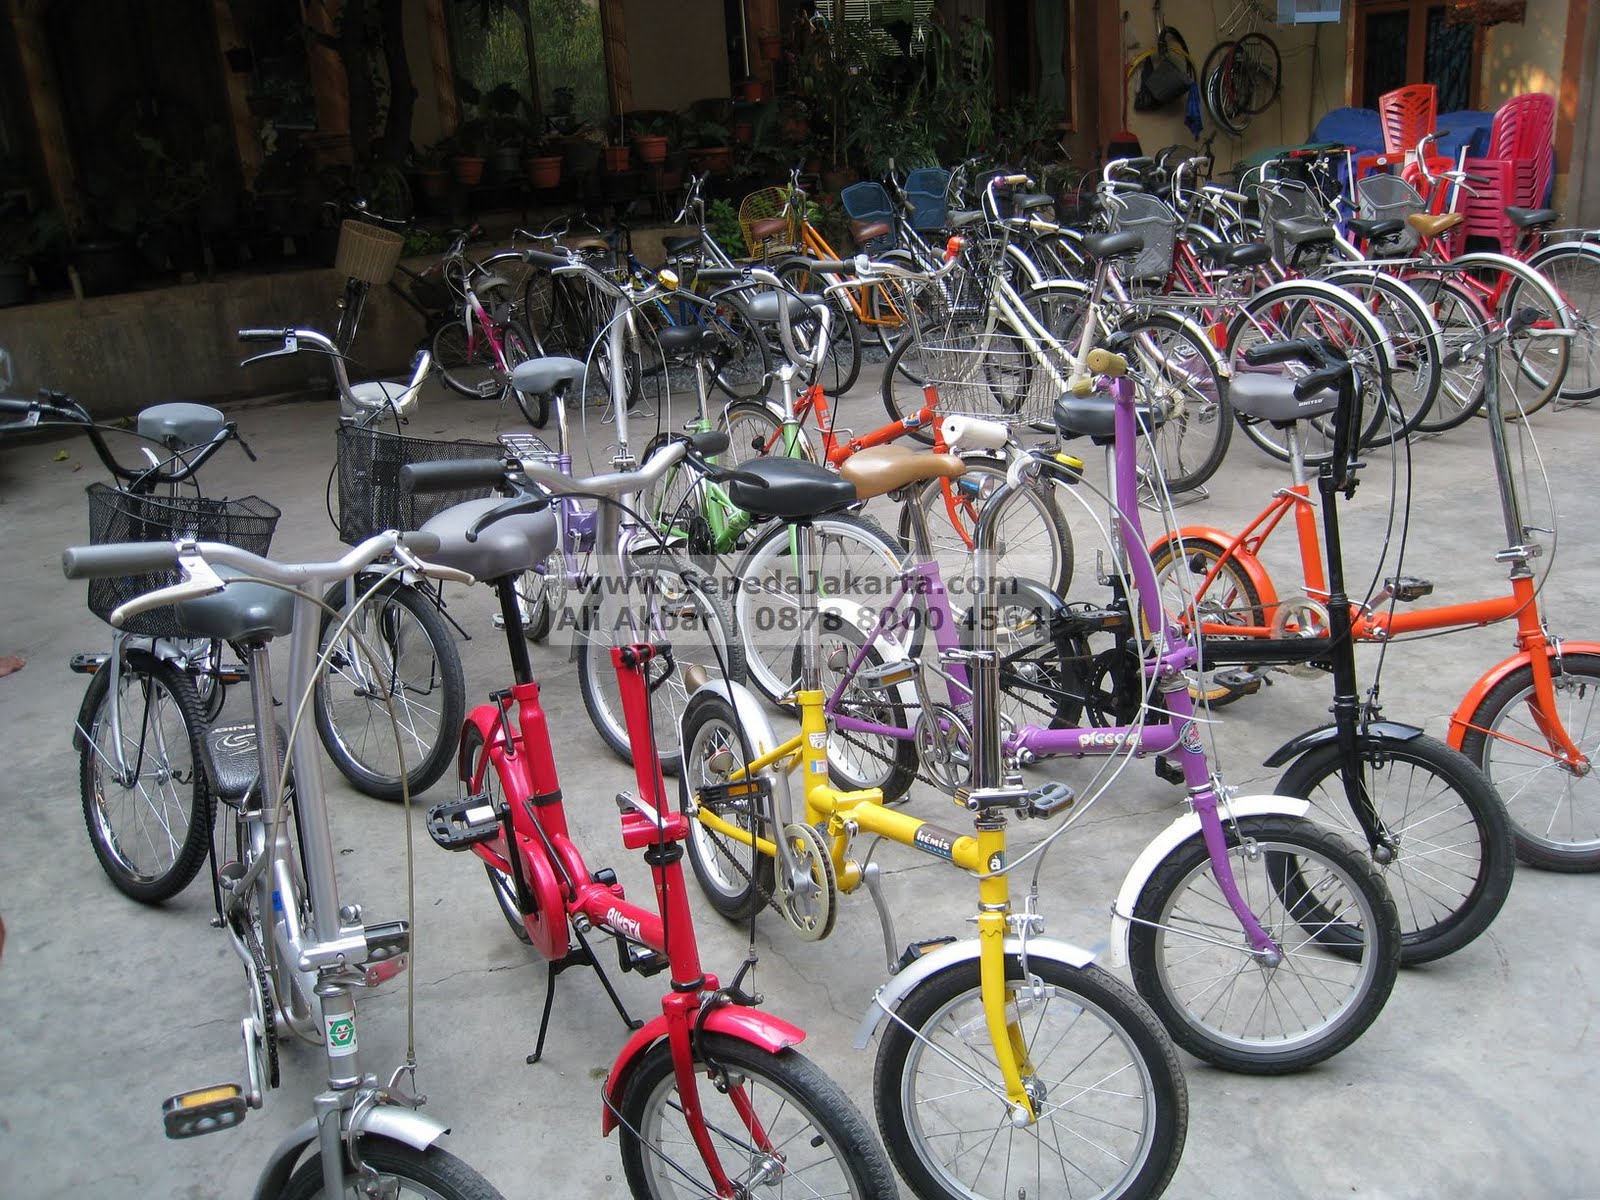 Sewa Sepeda  Sewa Sepeda  di  Jakarta  Sewa Sepeda  Murah